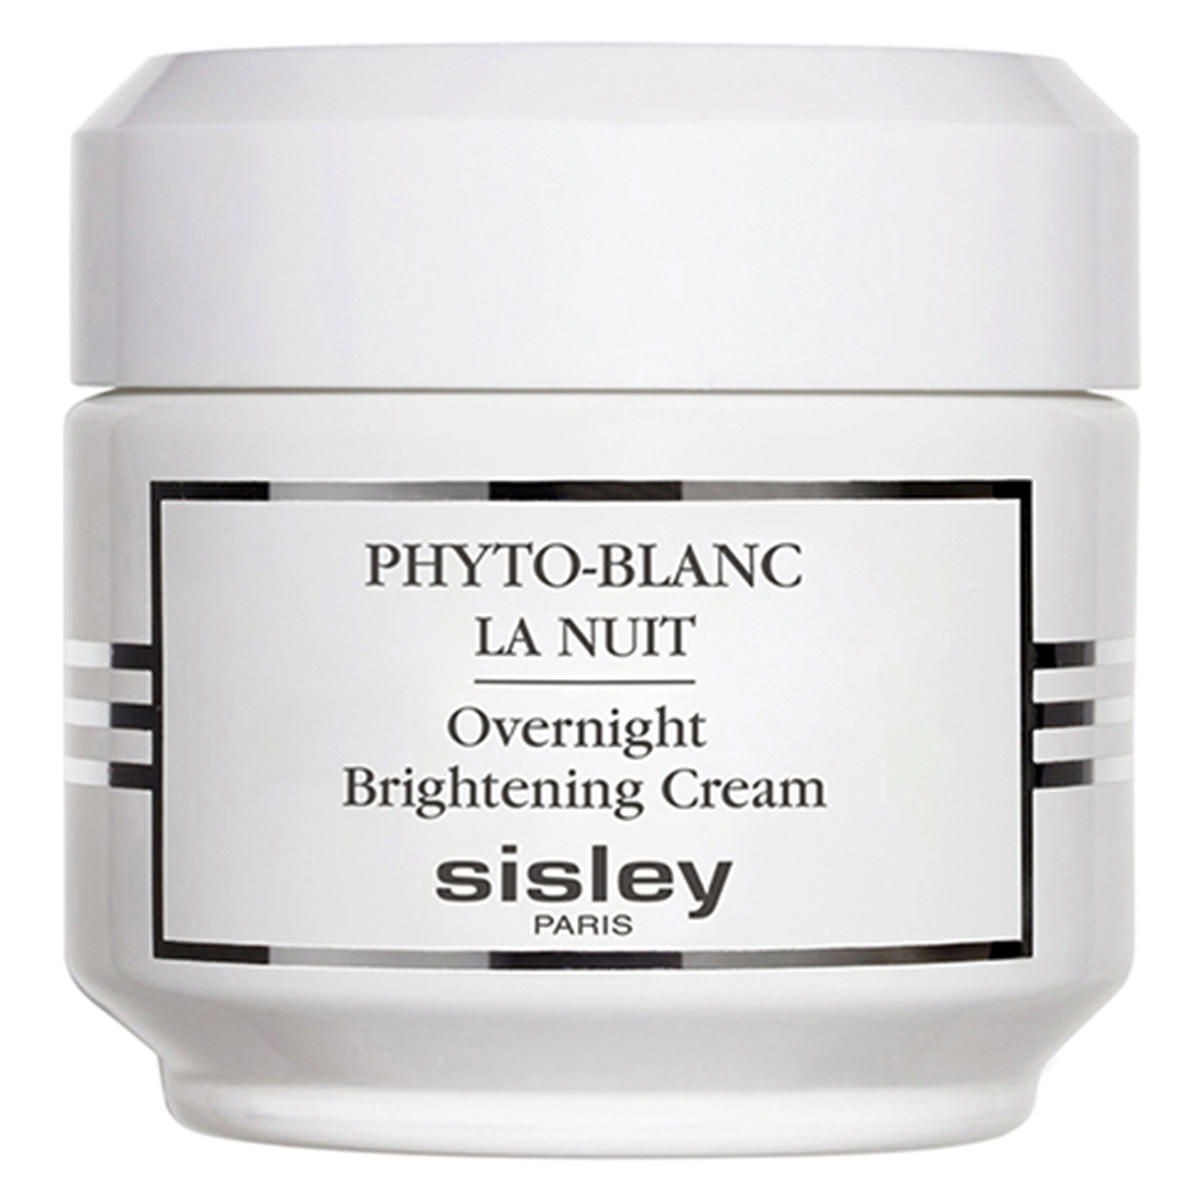 Sisley Paris Phyto-Blanc La Nuit 50 ml - 1